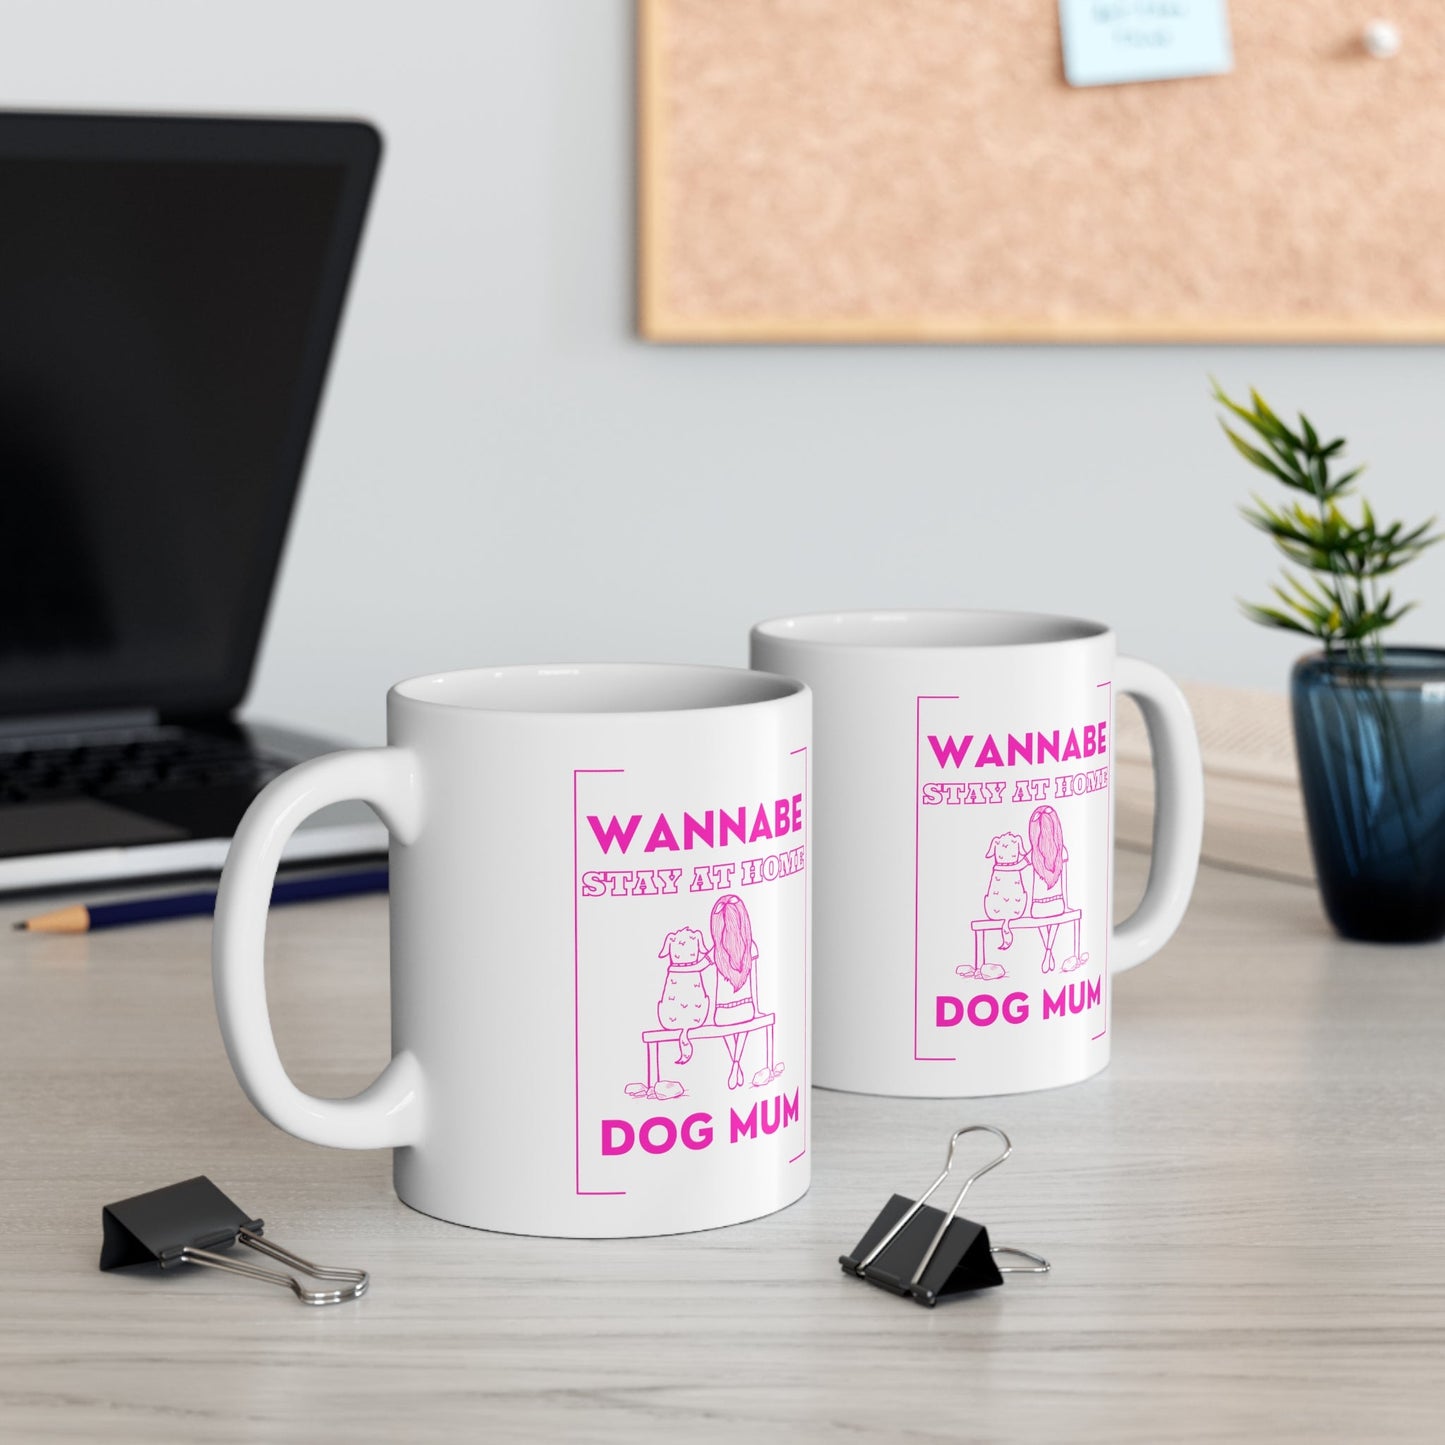 Wannabe Stay at Home Dog Mum White Mug - Designs by DKMc